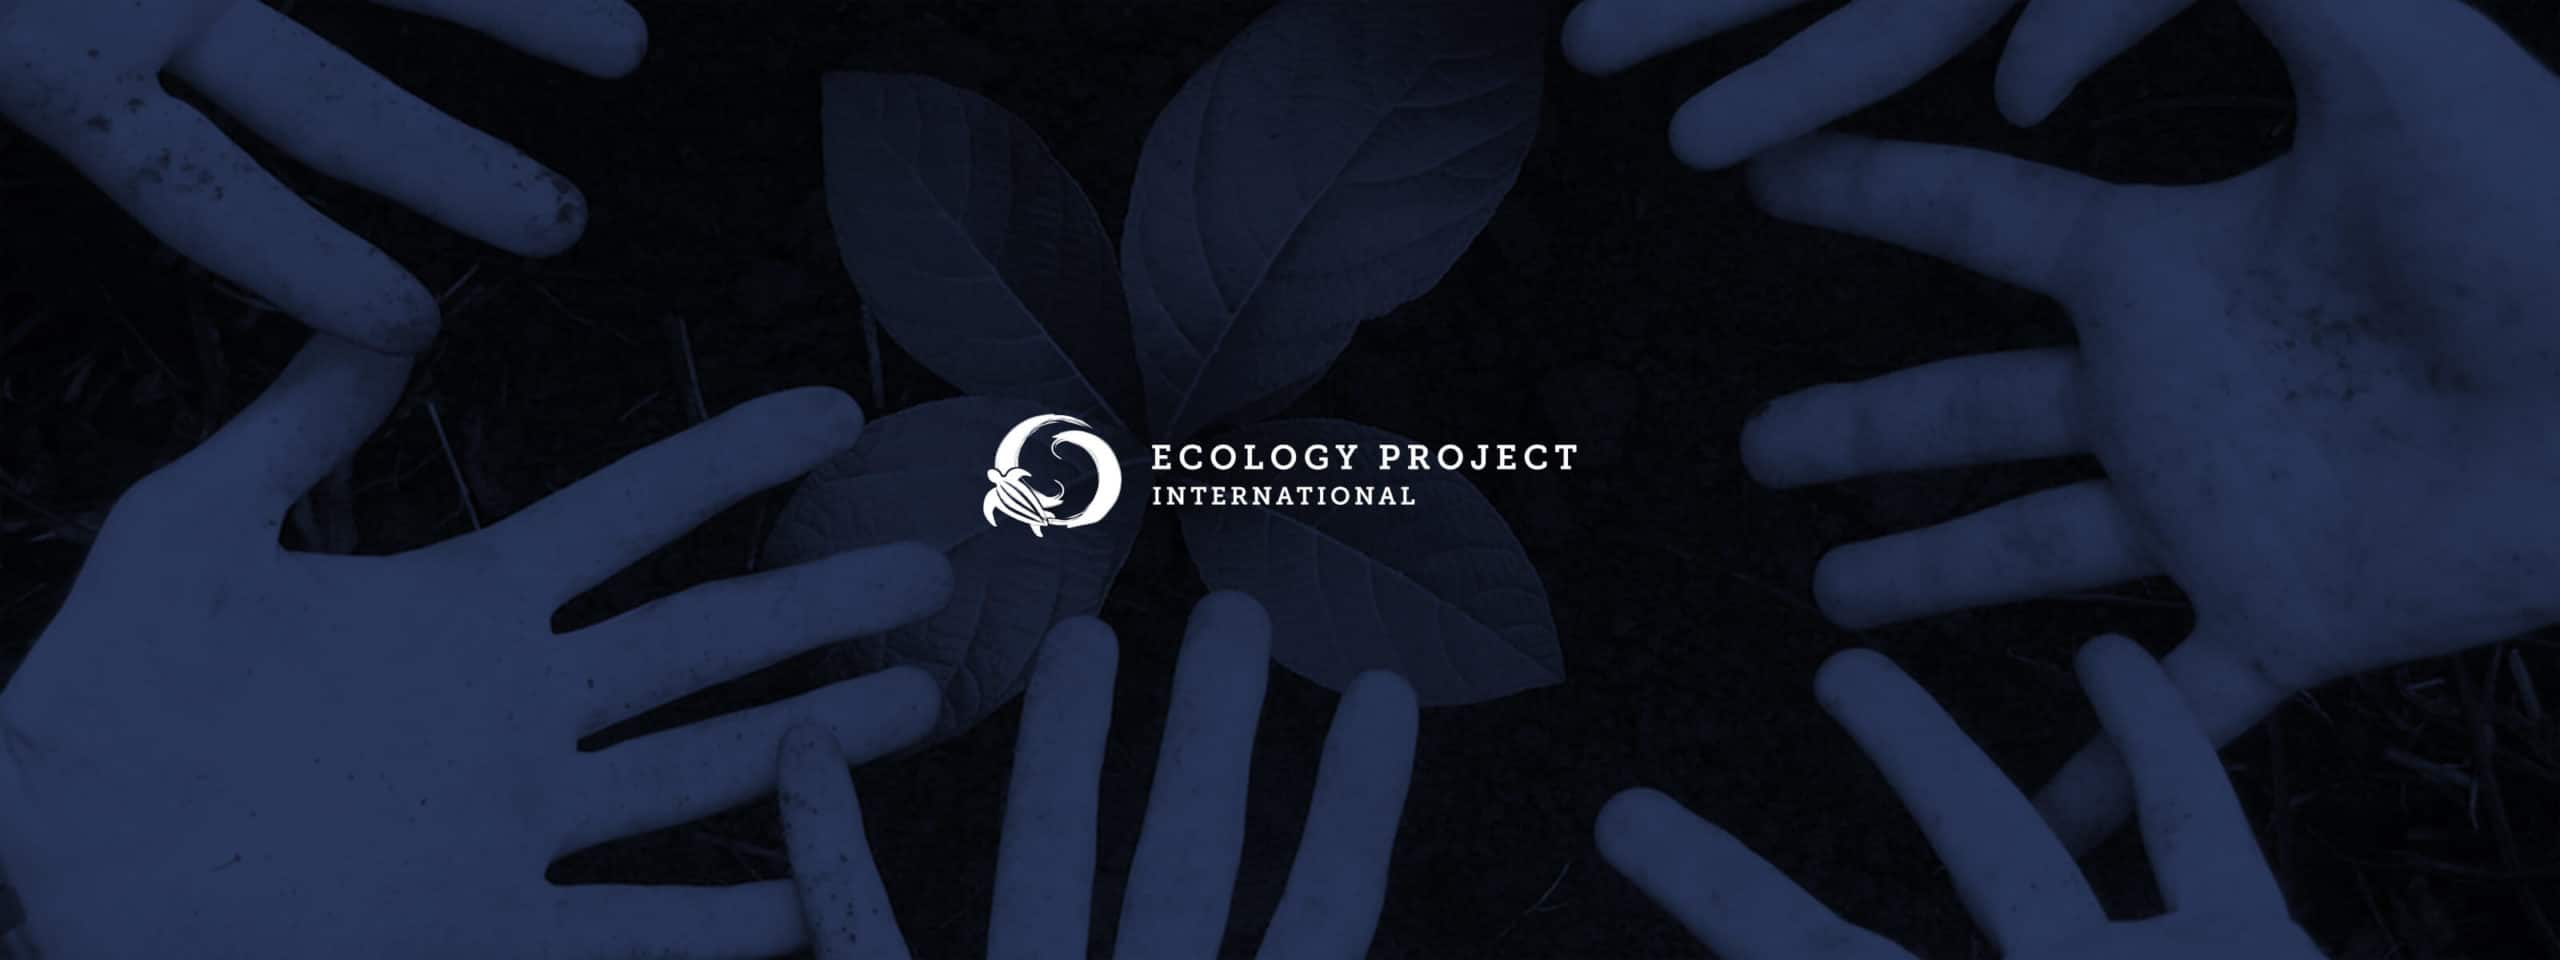 Ecology Project International logo and hero